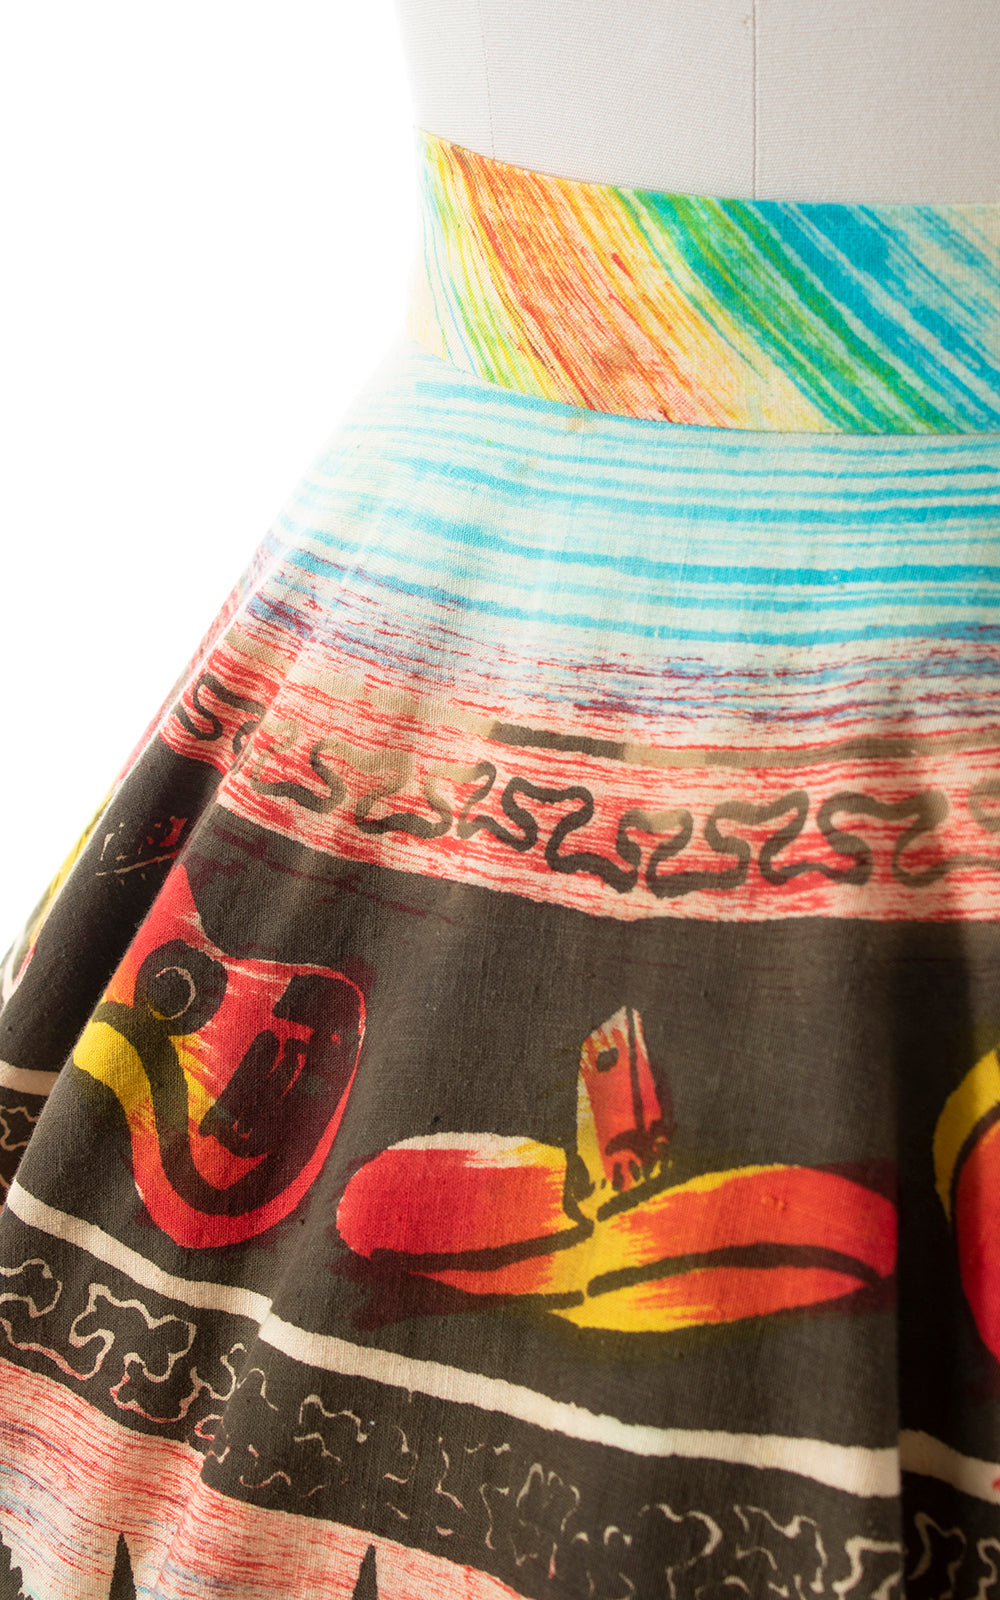 1950s Mexican Novelty Hand-Painted Circle Skirt | medium